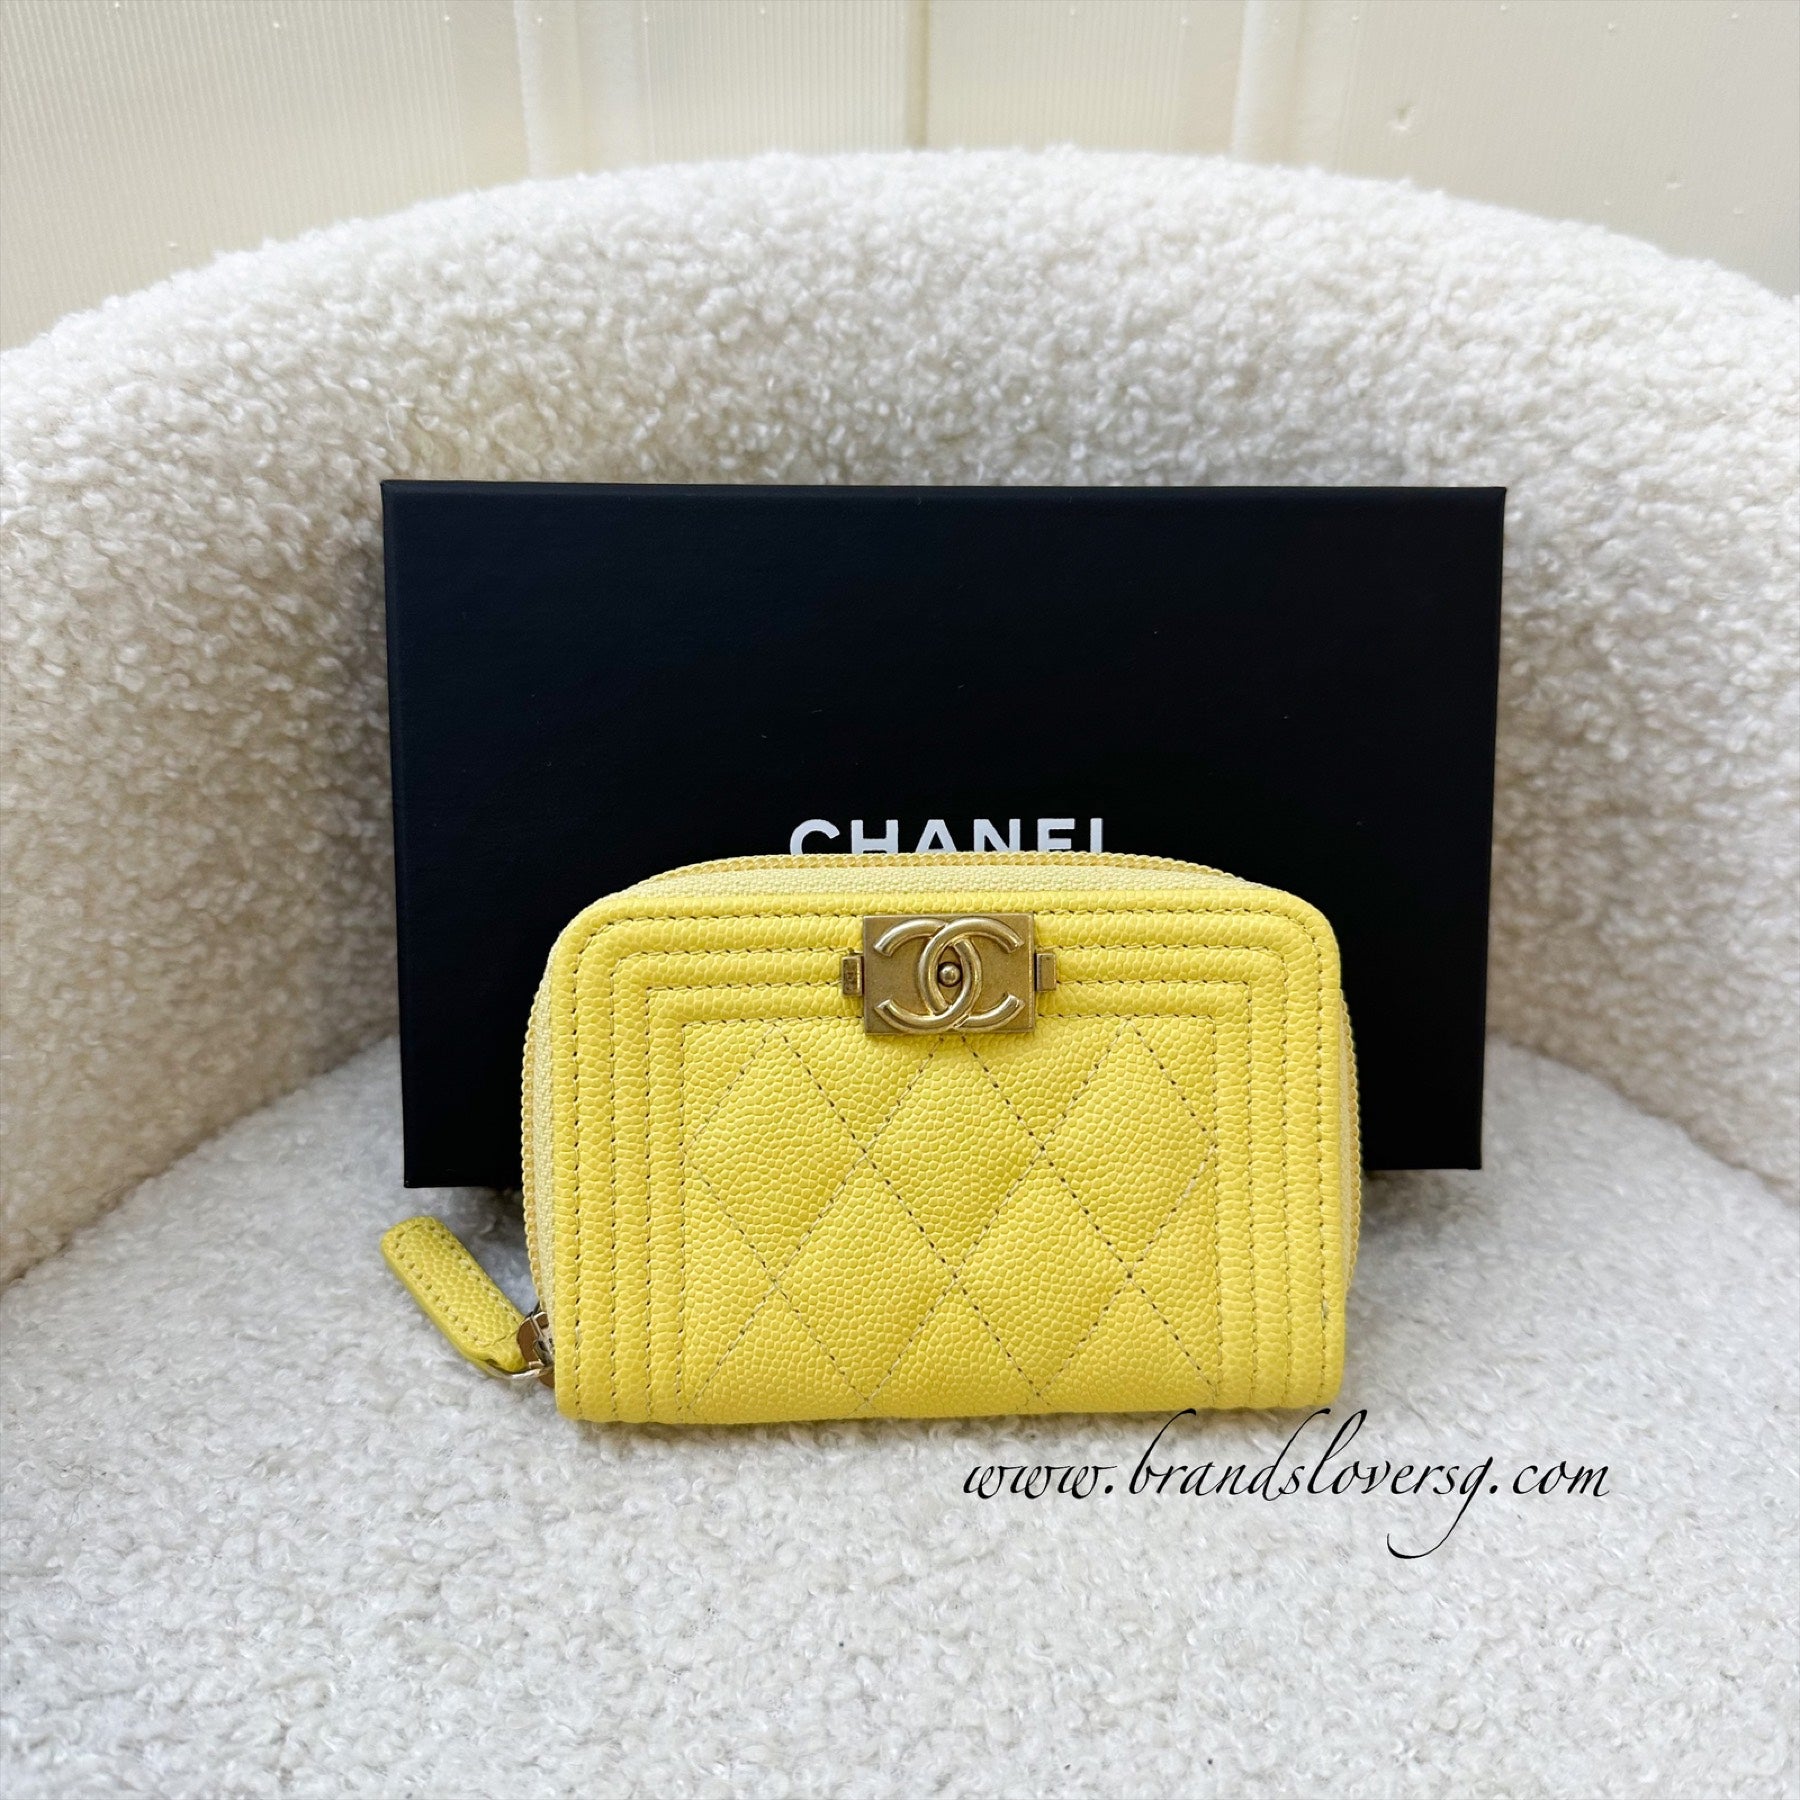 Chanel Yellow Caviar Zip Around Wallet Small Q6ADVD0FYH001